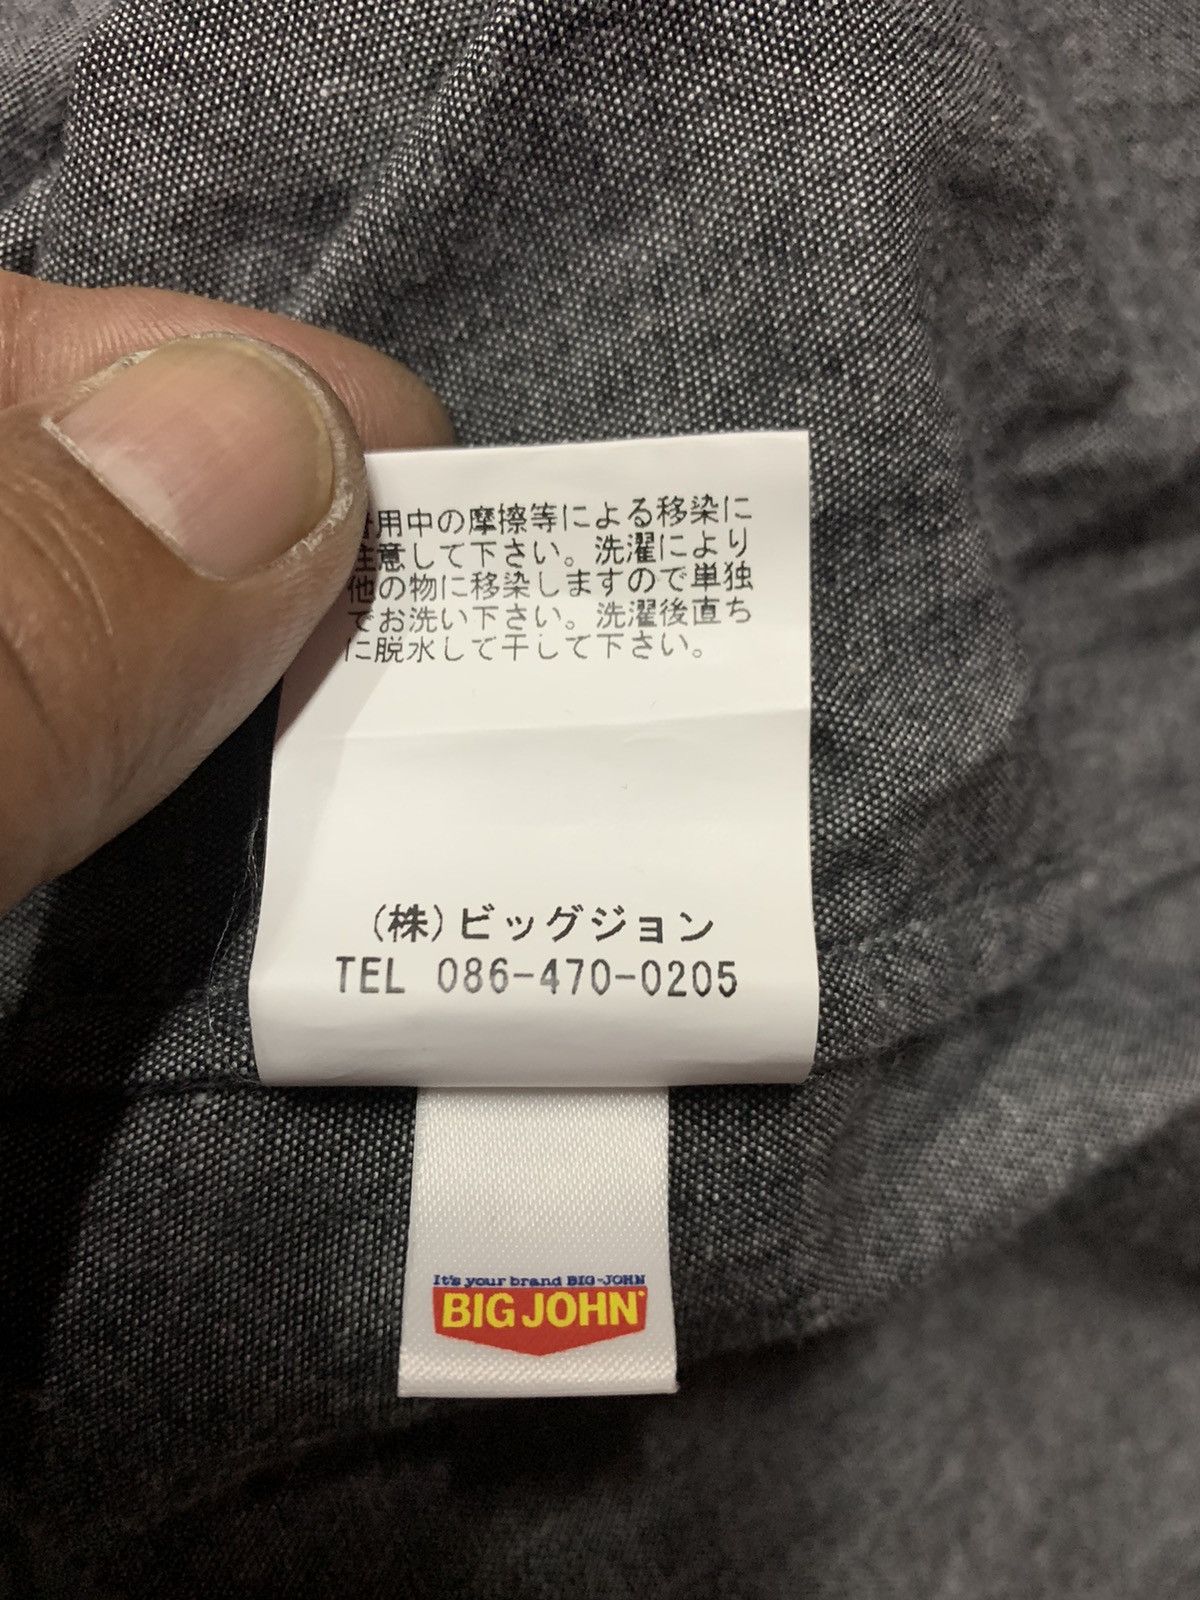 Big John Big John western jeans Size US S / EU 44-46 / 1 - 14 Thumbnail